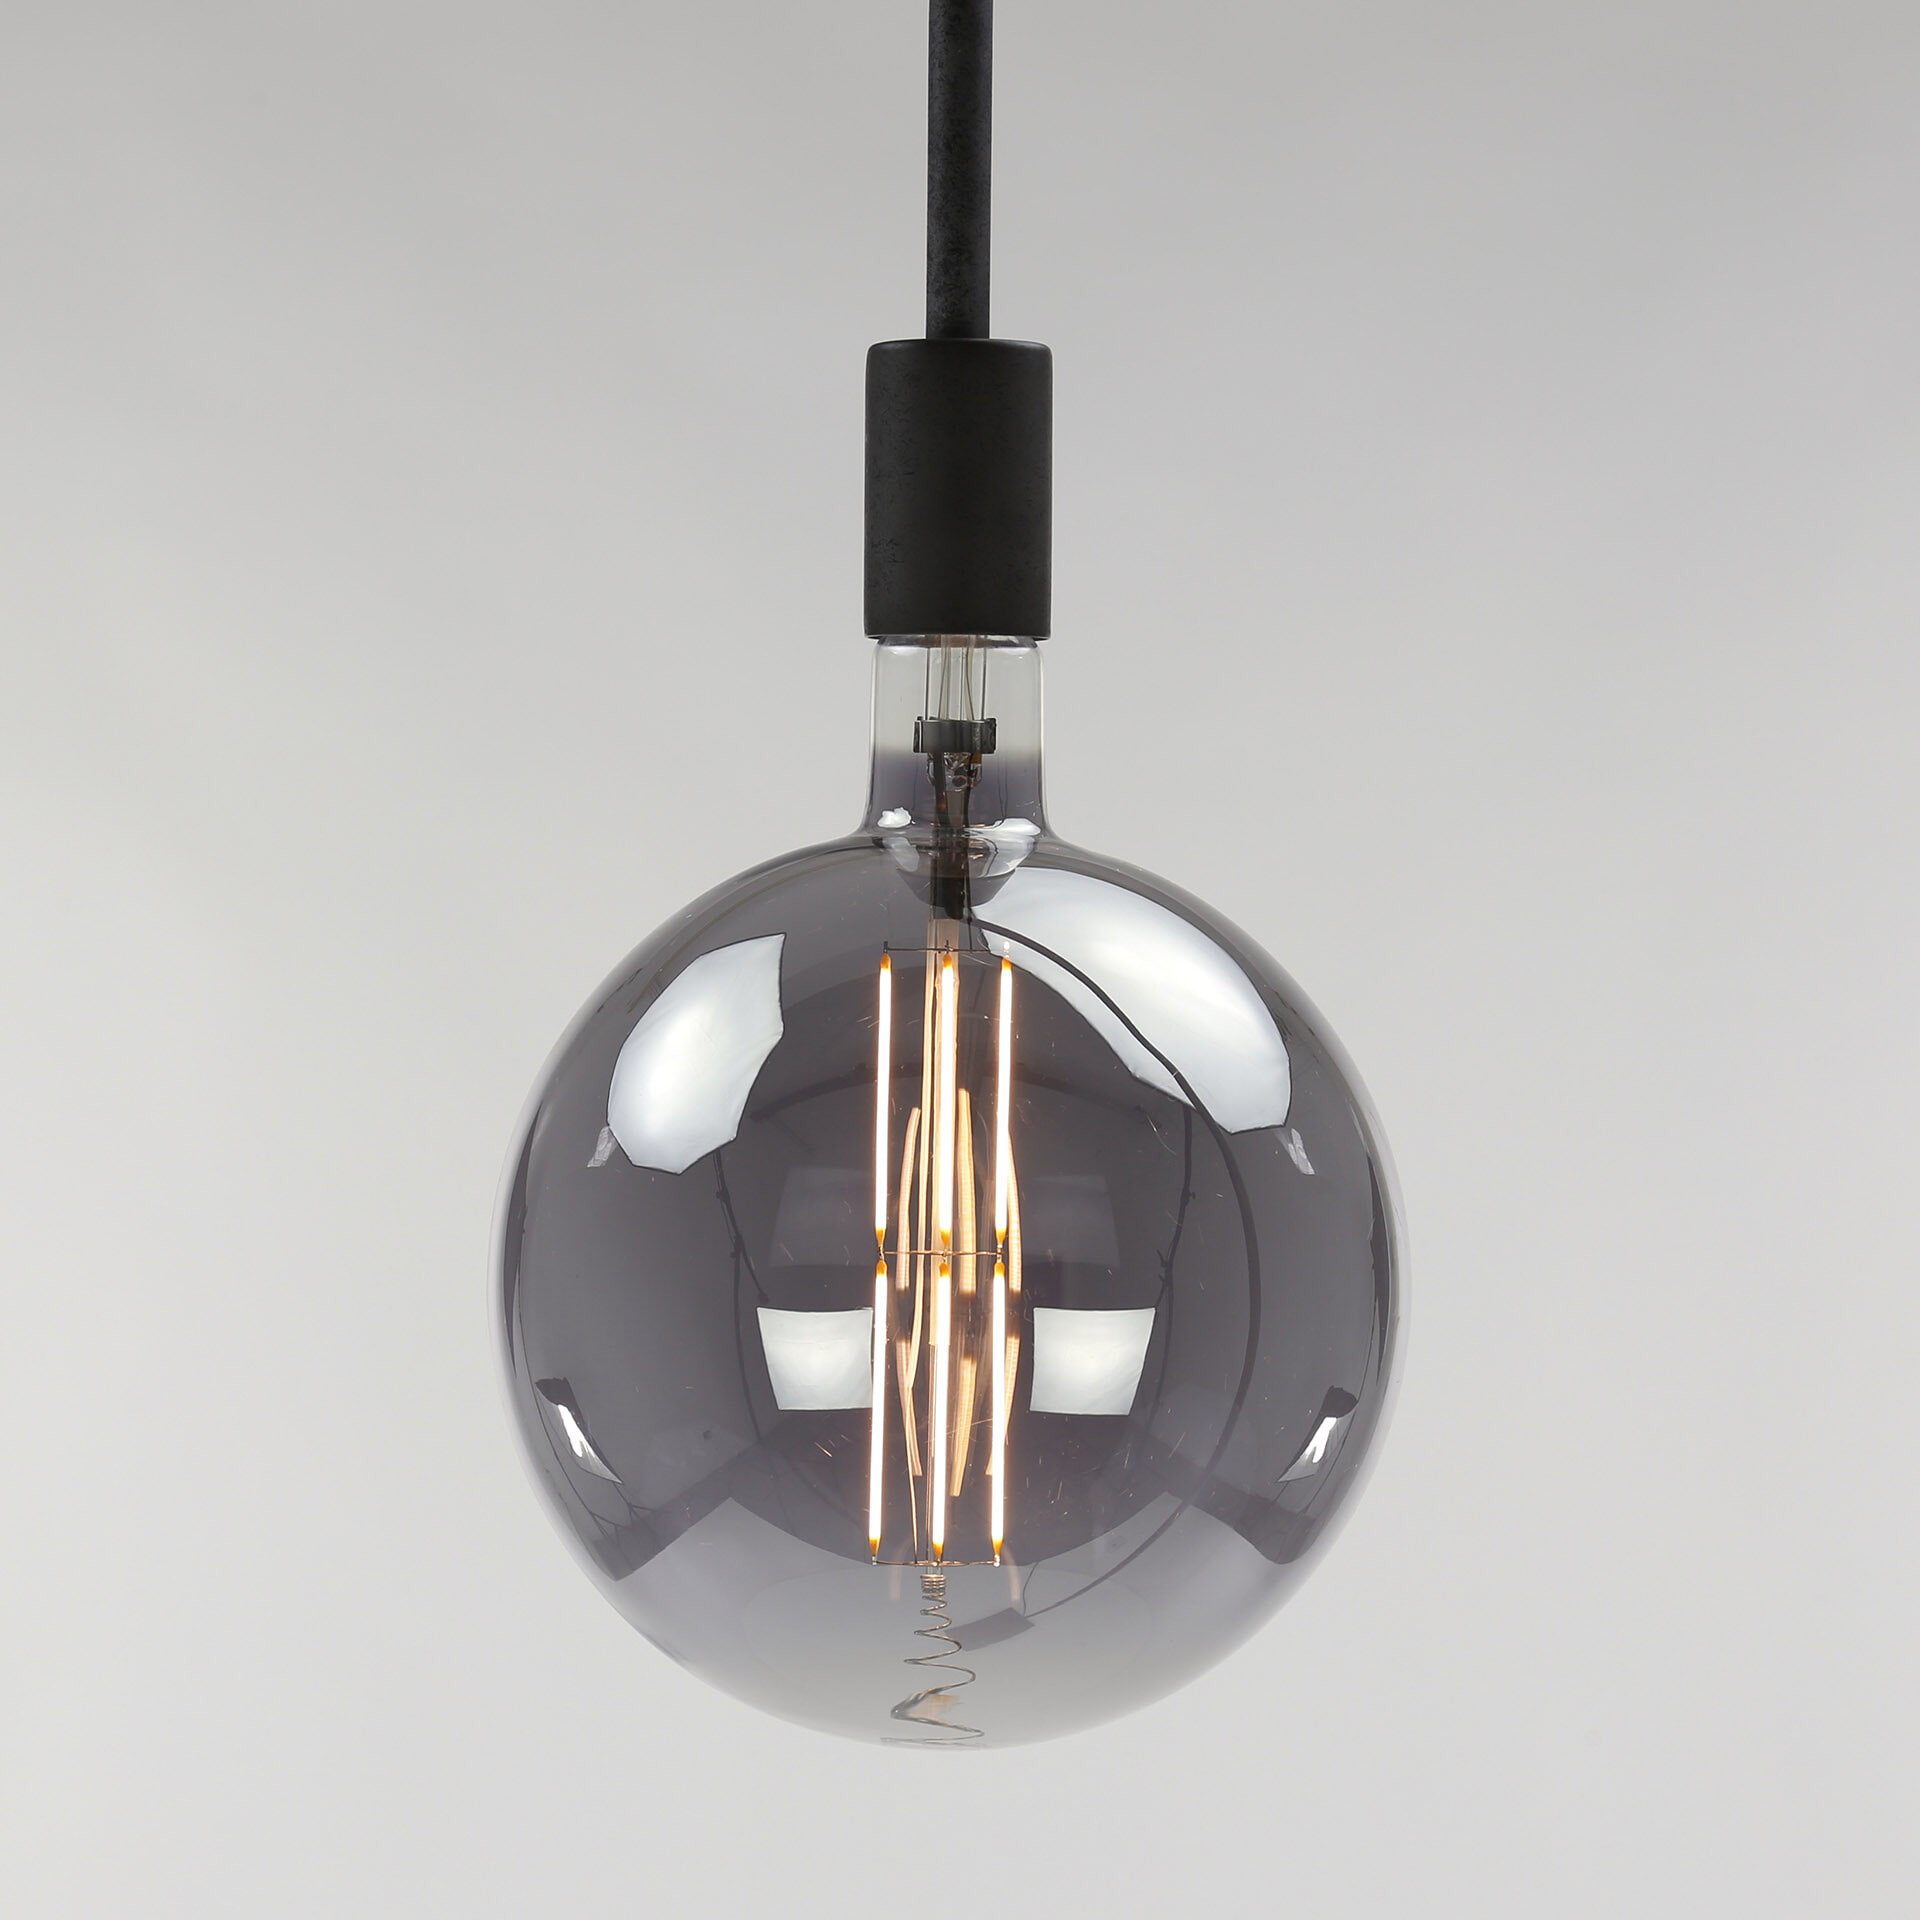 Kooldraadlamp Bol XXL Ø20cm, LED E27 / 8W, Smoke grey, dimbaar - Smoke grey glas